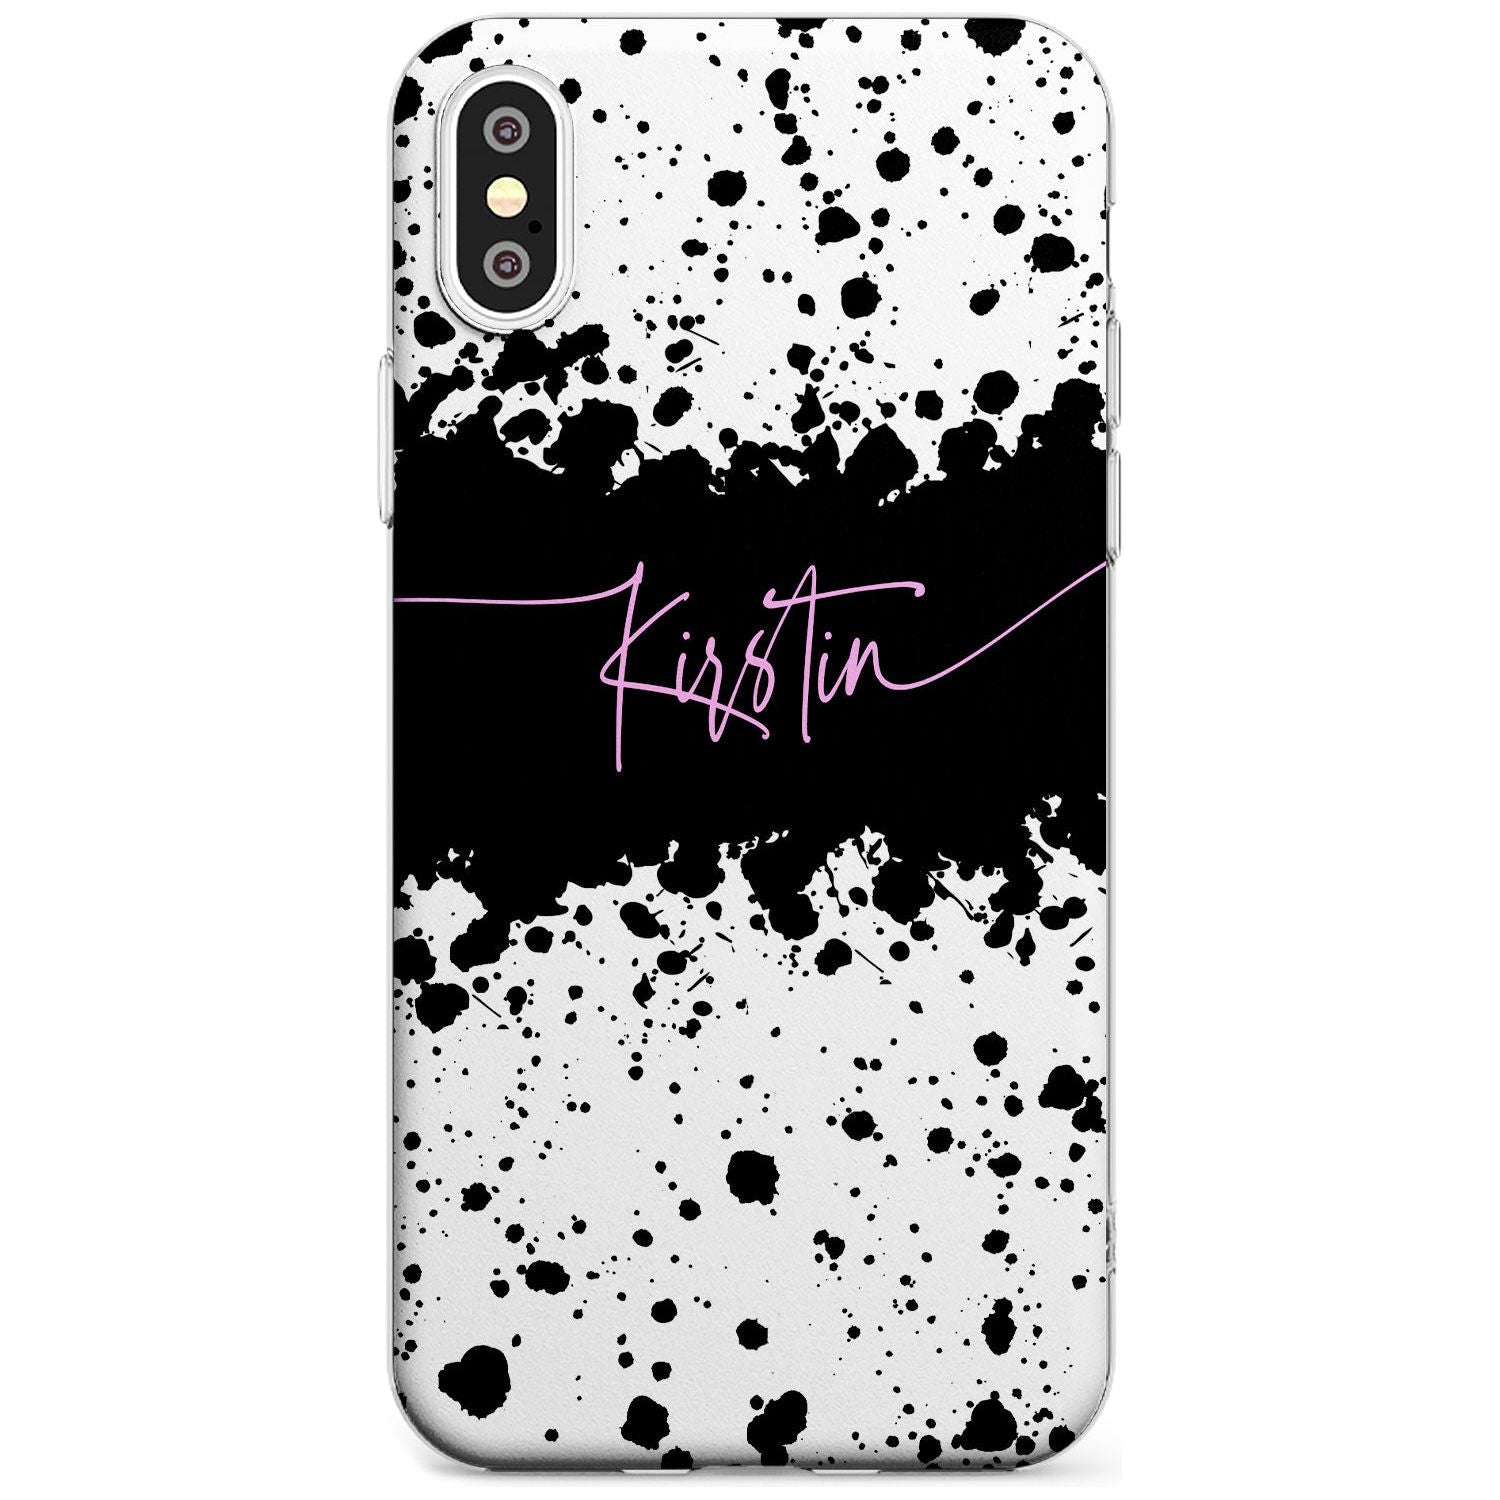 Black & White Paint Splatters iPhone Case  Slim Case Custom Phone Case - Case Warehouse